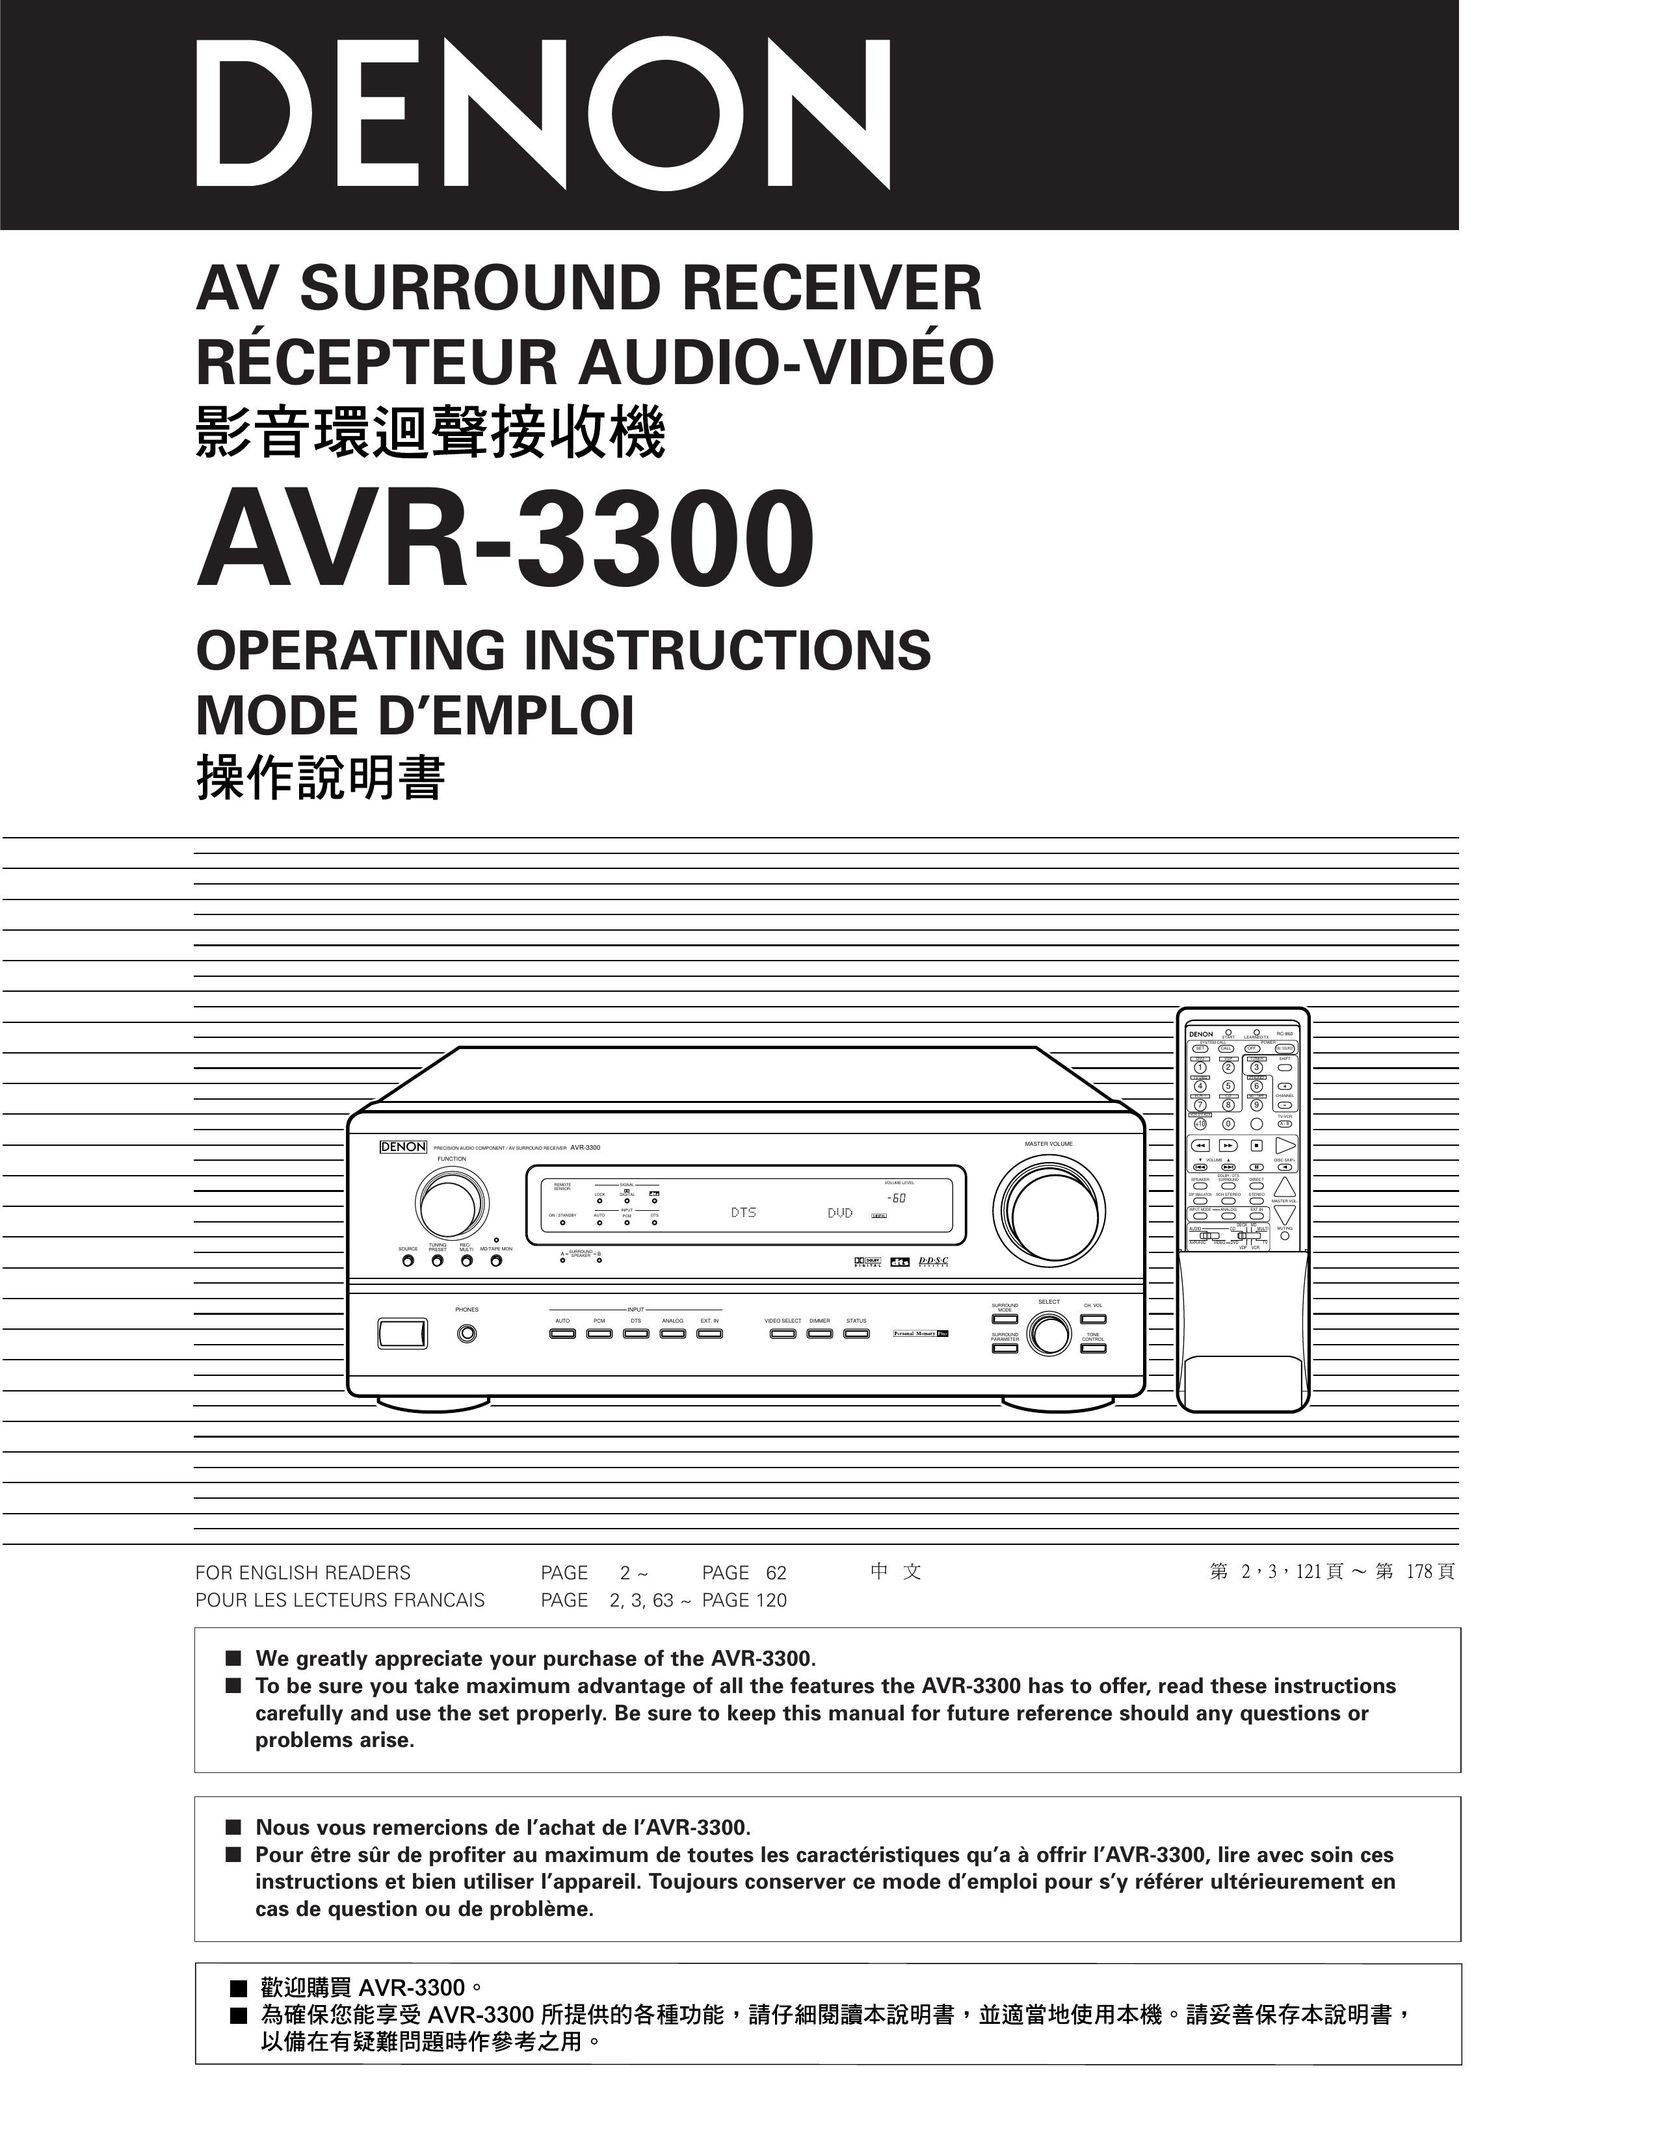 Denon AVR-3300 Stereo Receiver User Manual